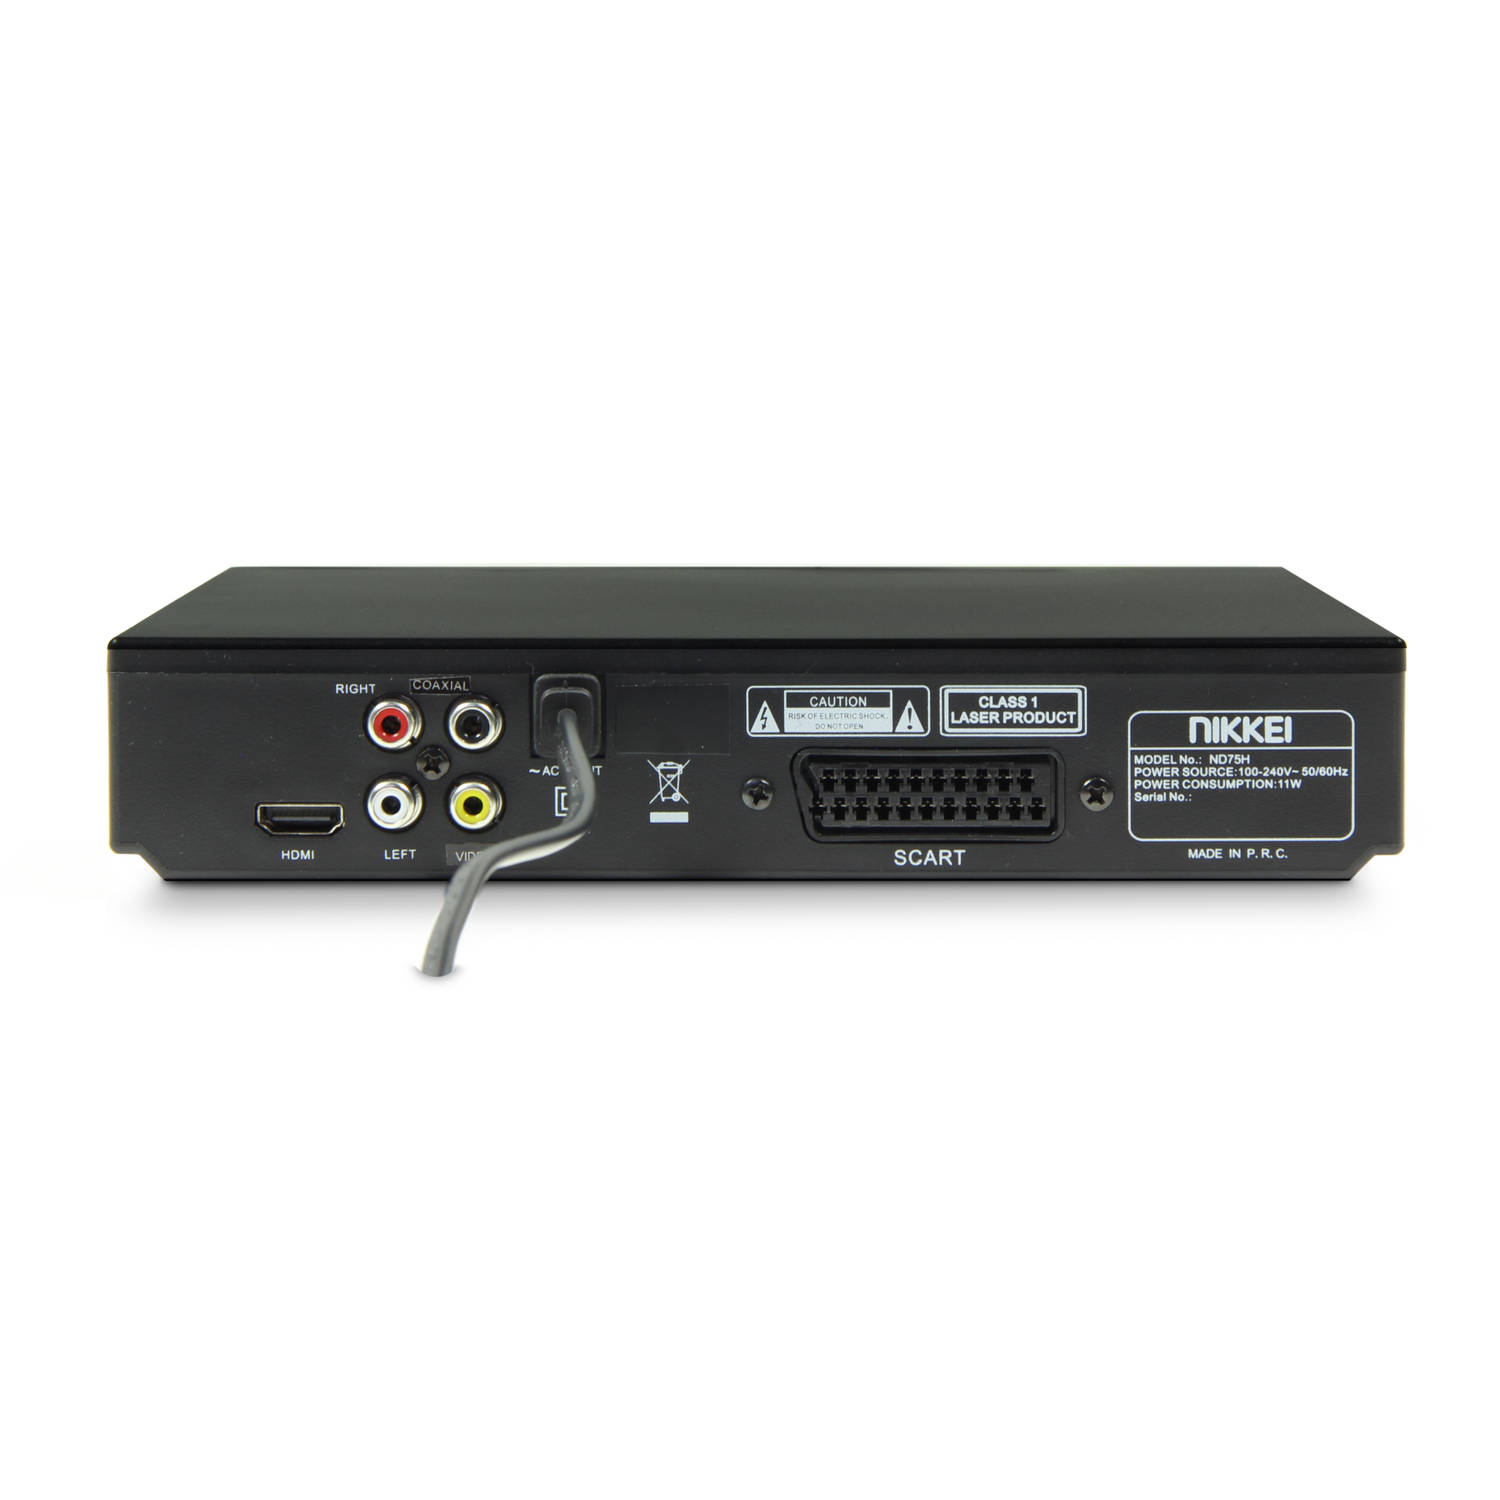 Doen bewijs lobby Nikkei ND75H DVD speler met Full HD-upscaling, HDMI en USB-poort (22,5 cm)  | Blokker